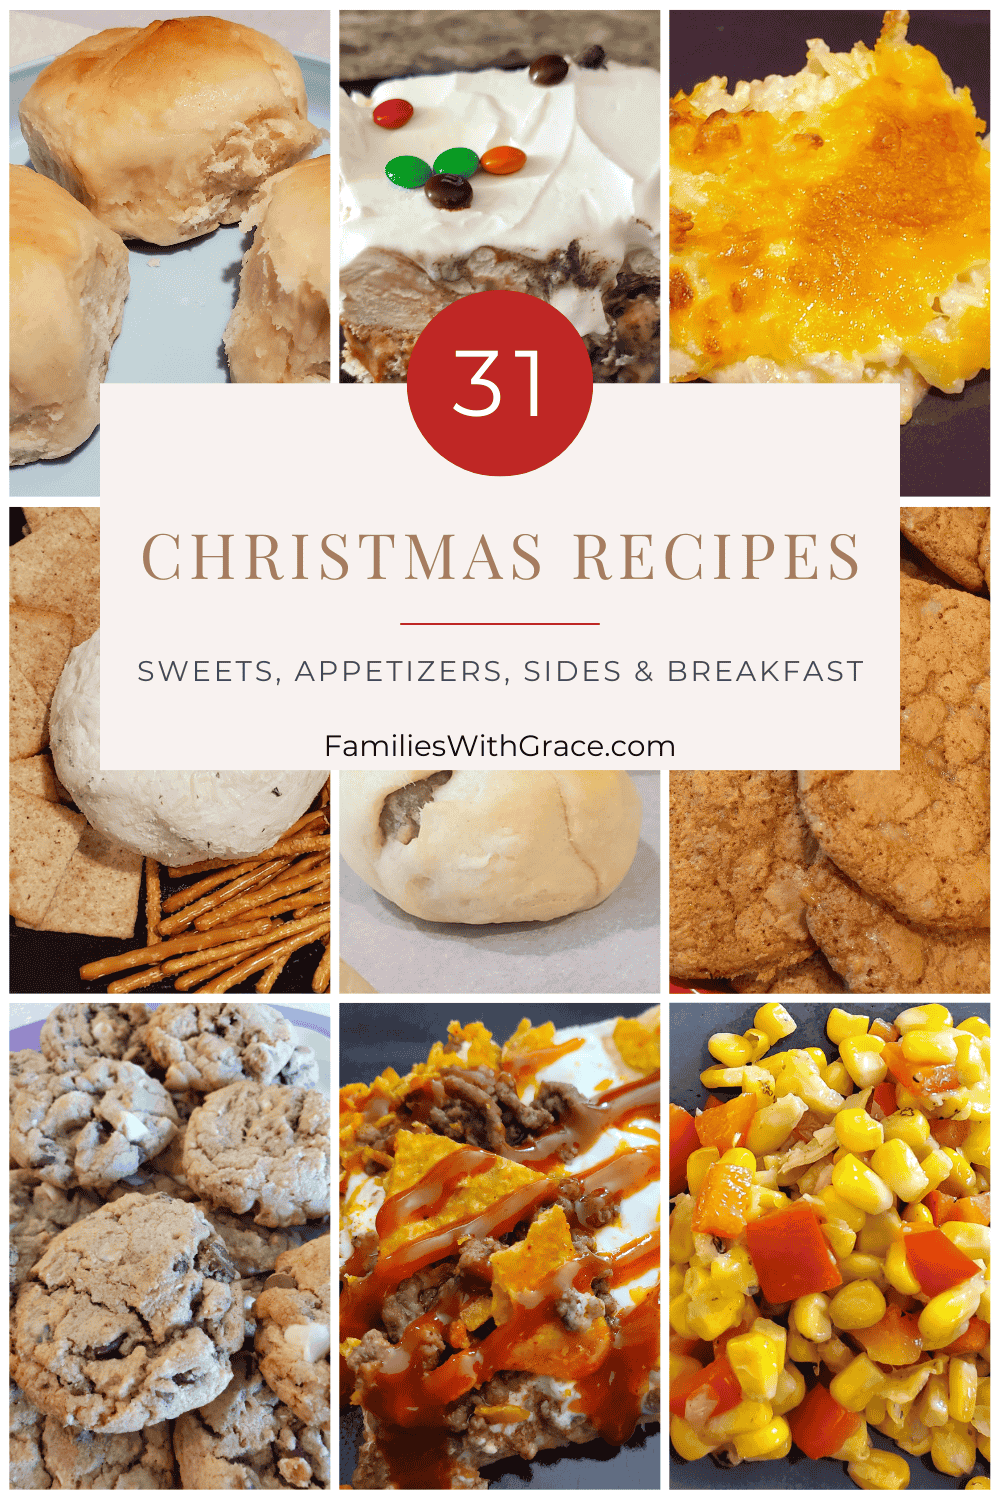 Christmas recipes round-up